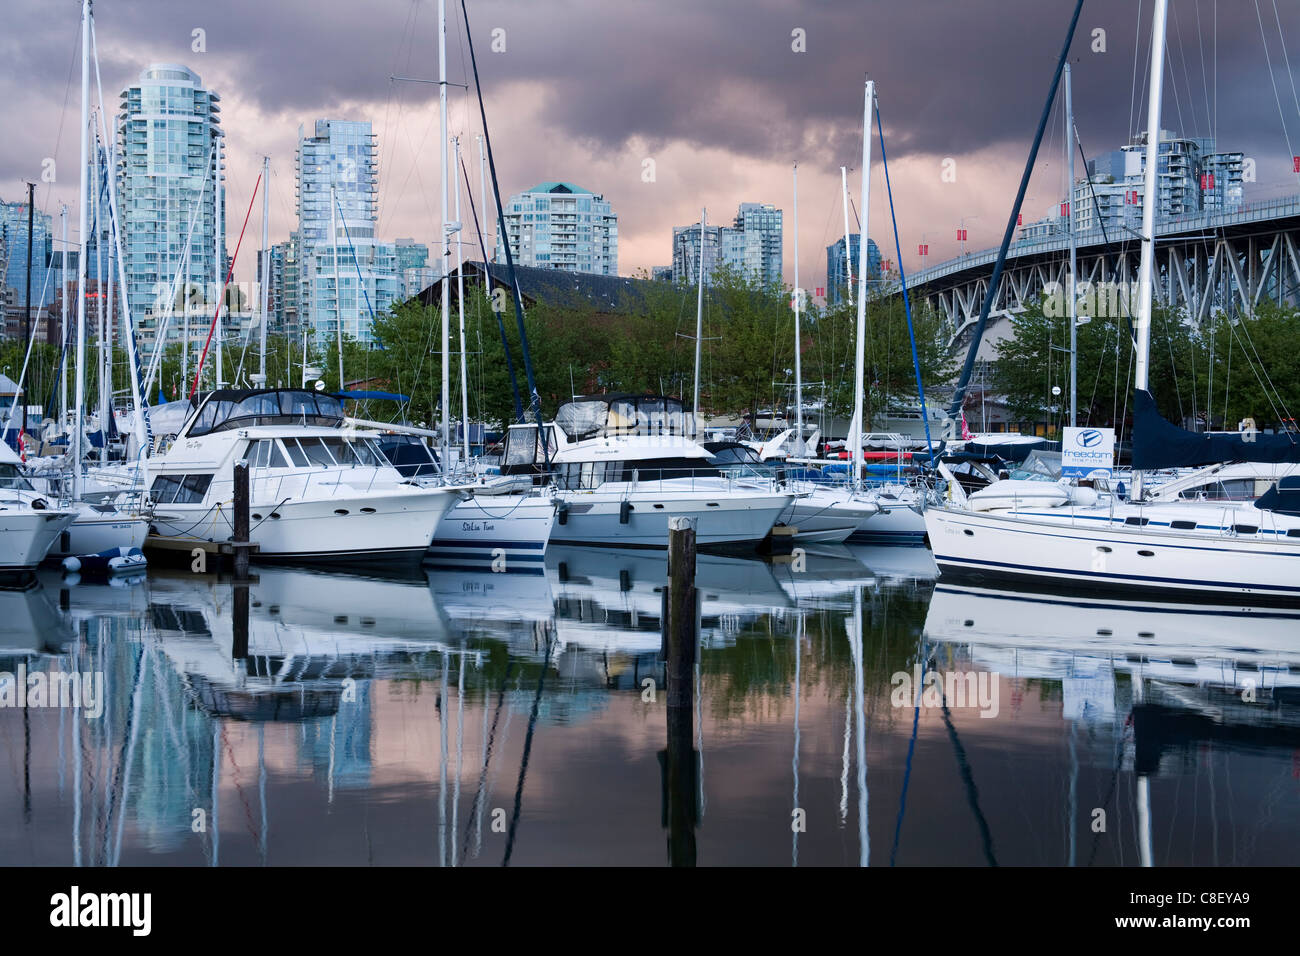 Broker's Bay Marina and Granville Street Bridge, False Creek, Vancouver, British Columbia, Canada Stock Photo